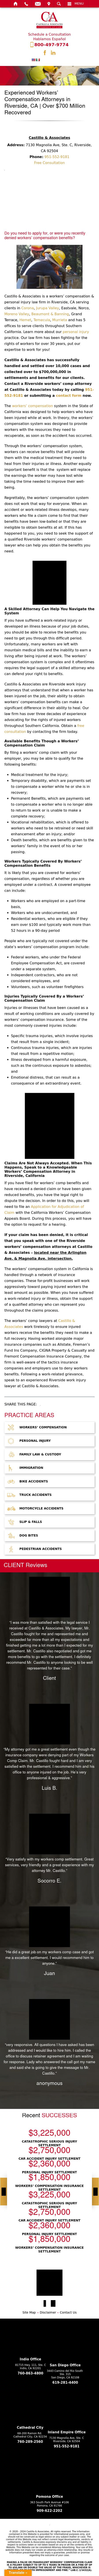 Castillo & Associates - Riverside CA Lawyers